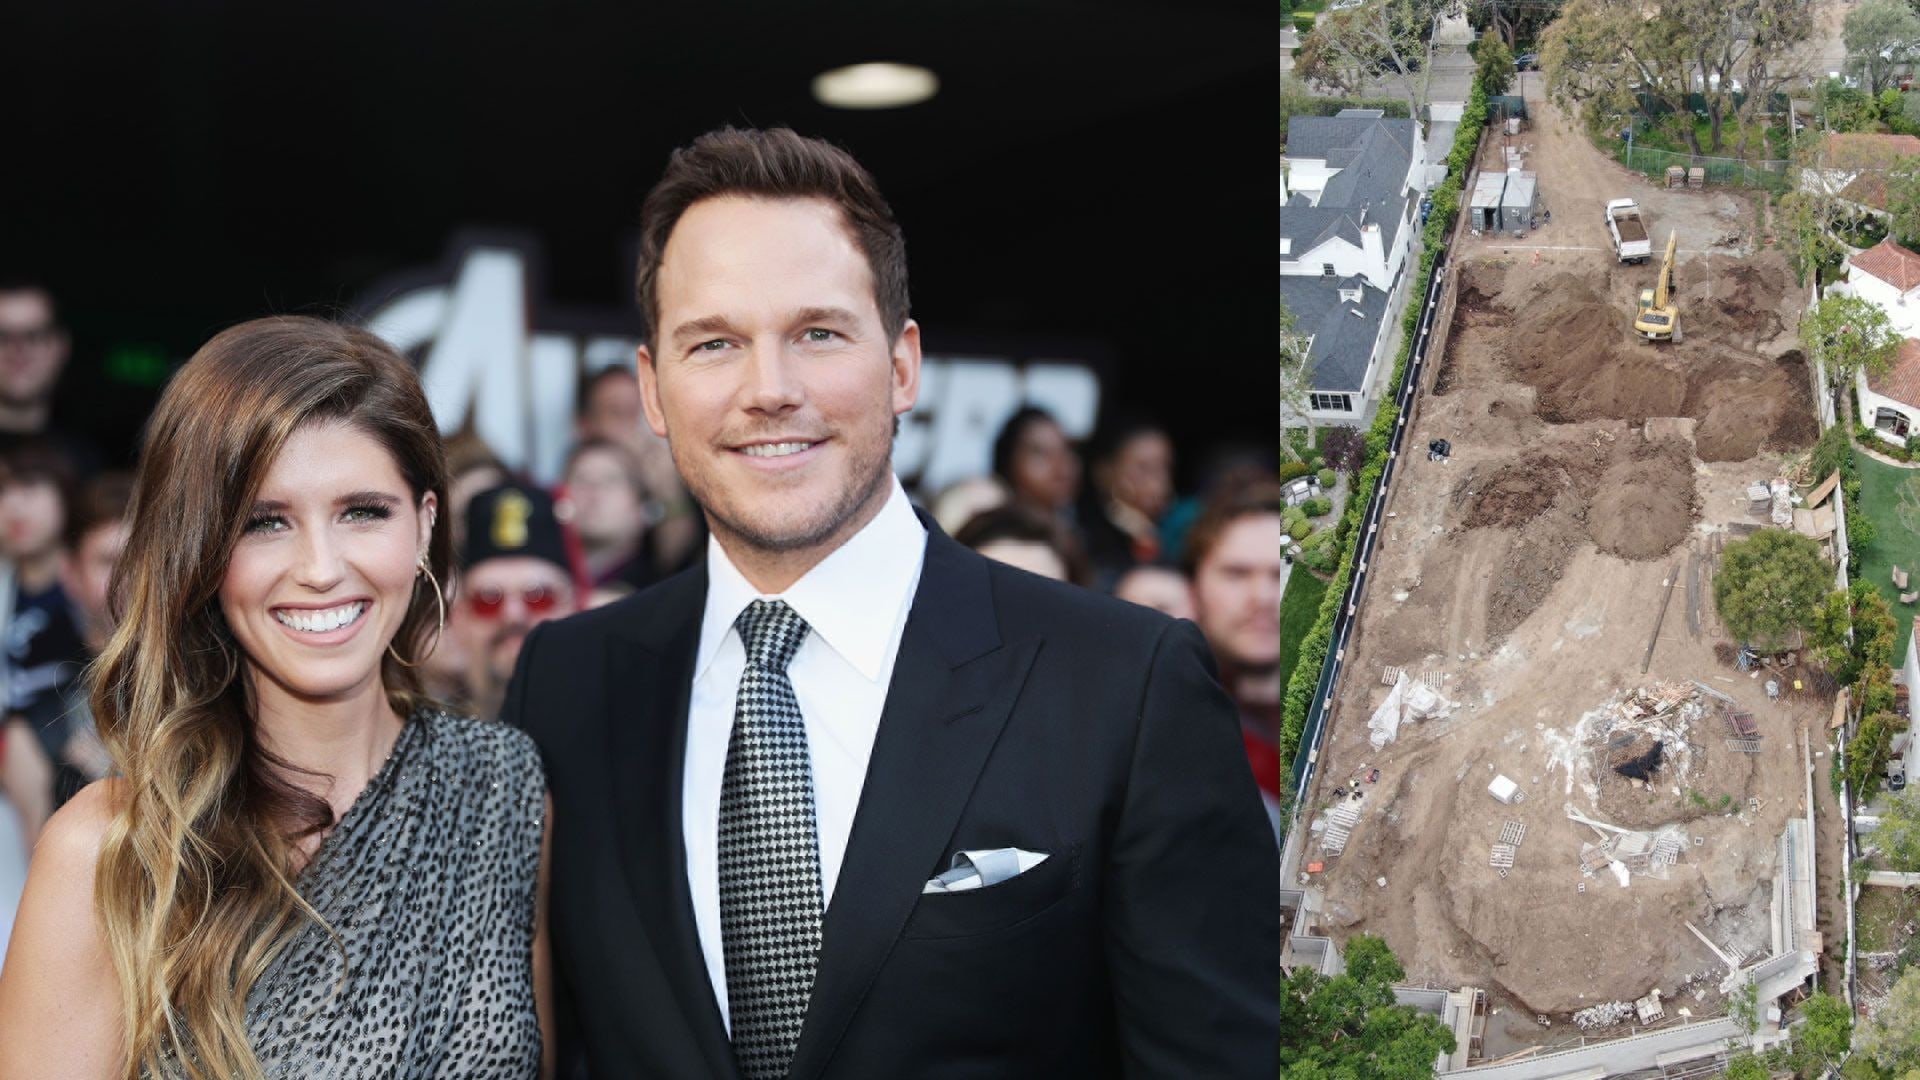 Chris Pratt demolishes historic $12.5 million LA house to build mega-mansion: shocking before and after photos